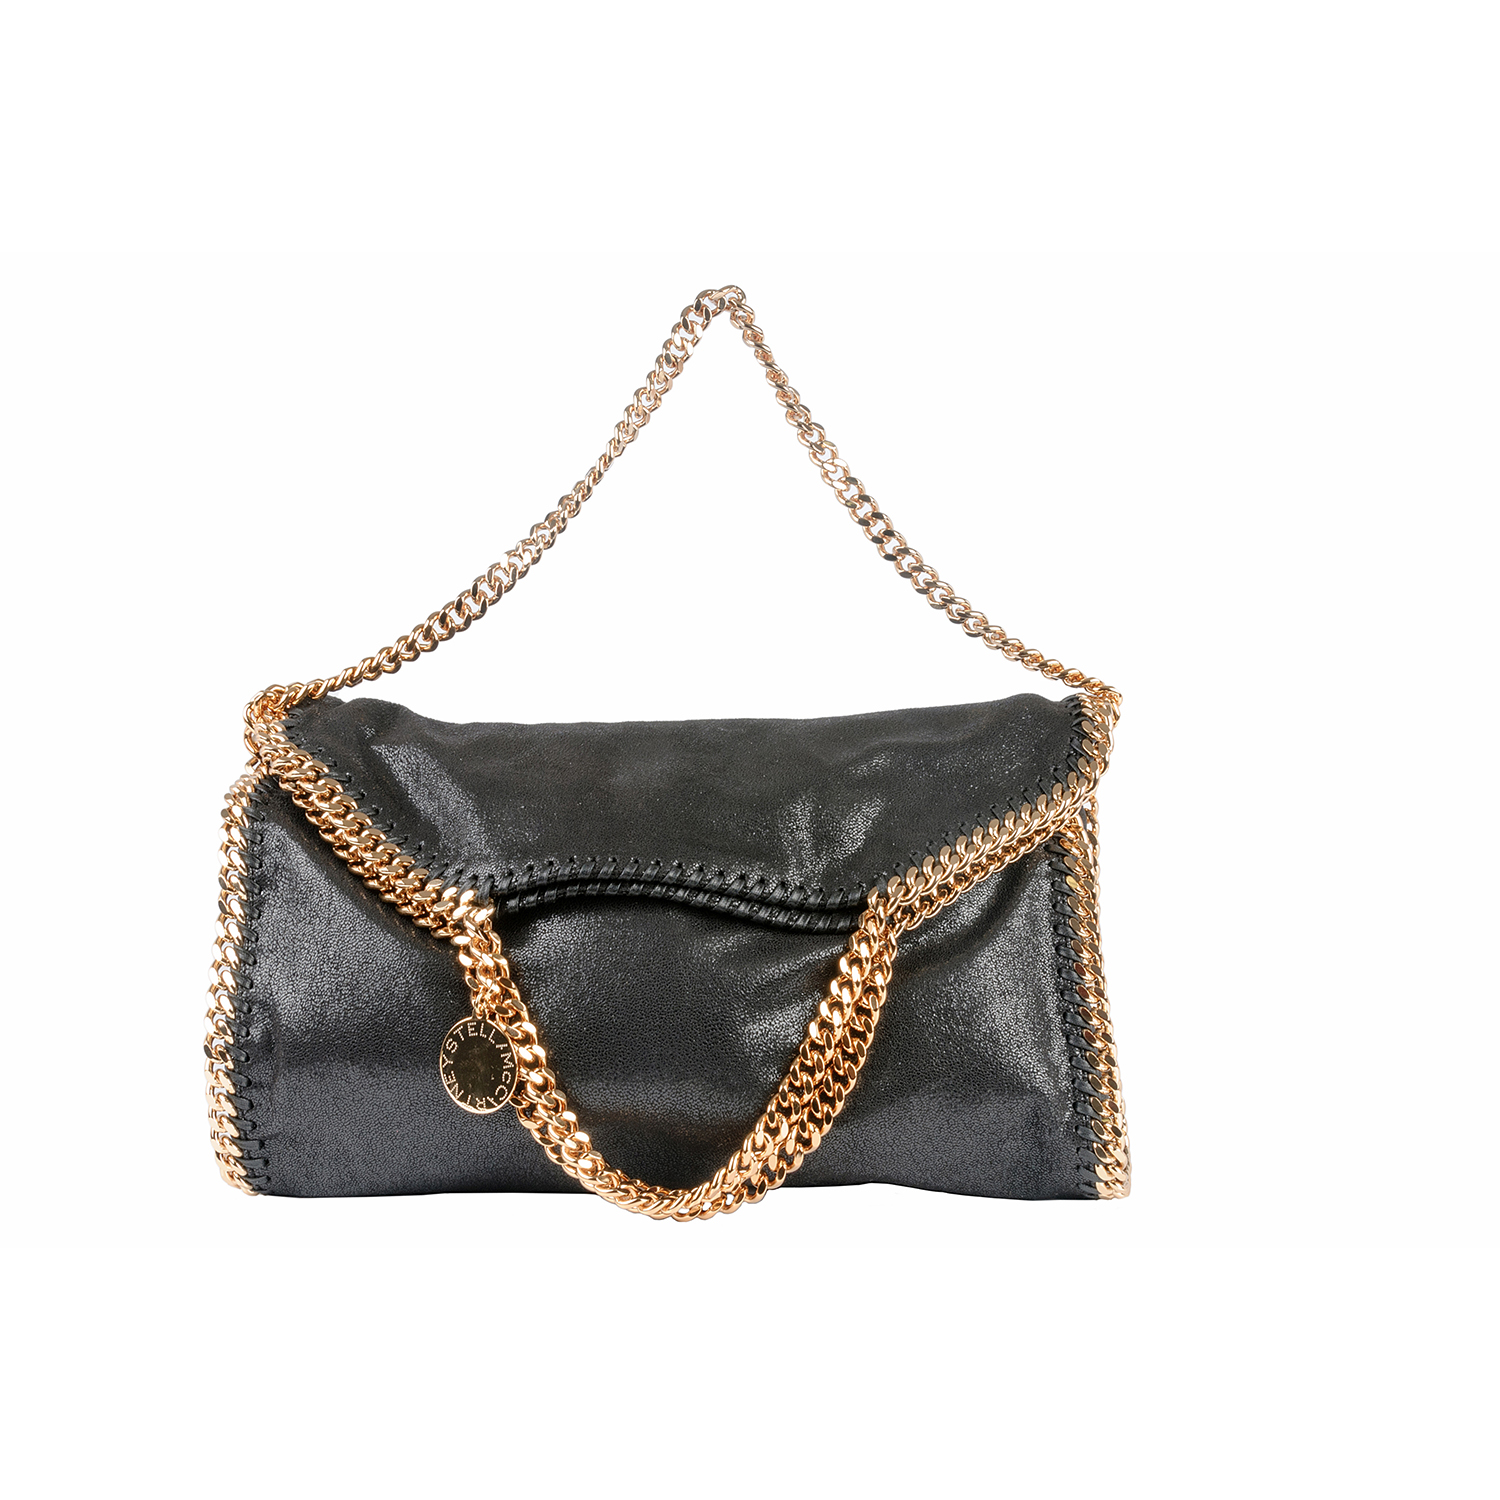 Handbag for rent Stella McCartney Falabella 3 Chains